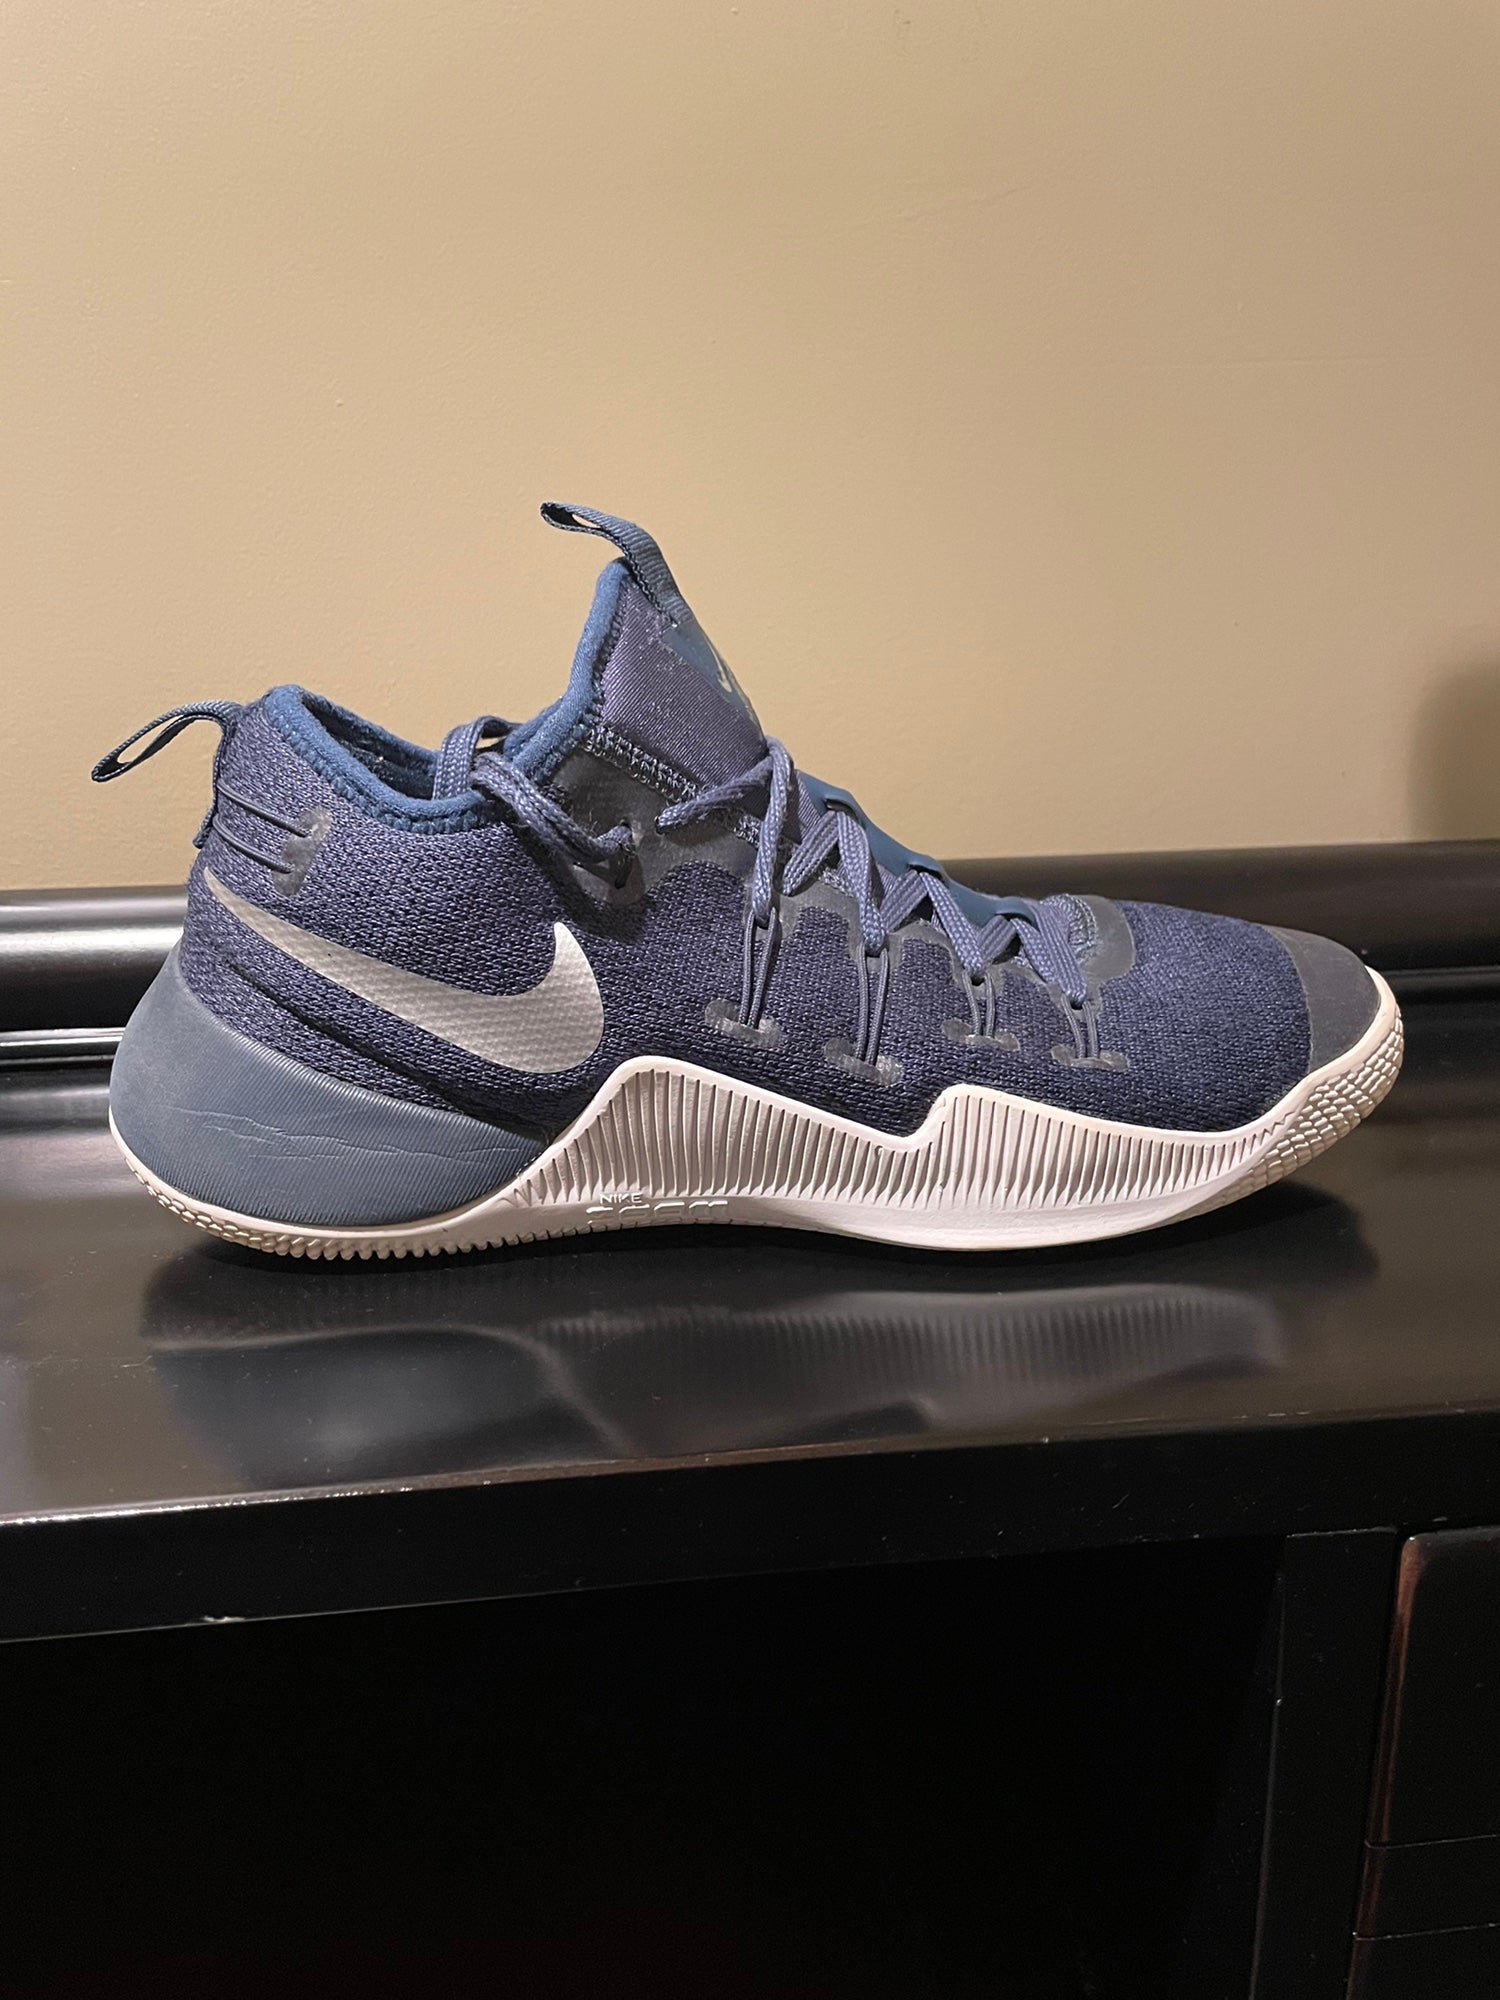 Hypershift Zoom basketball shoes | SidelineSwap